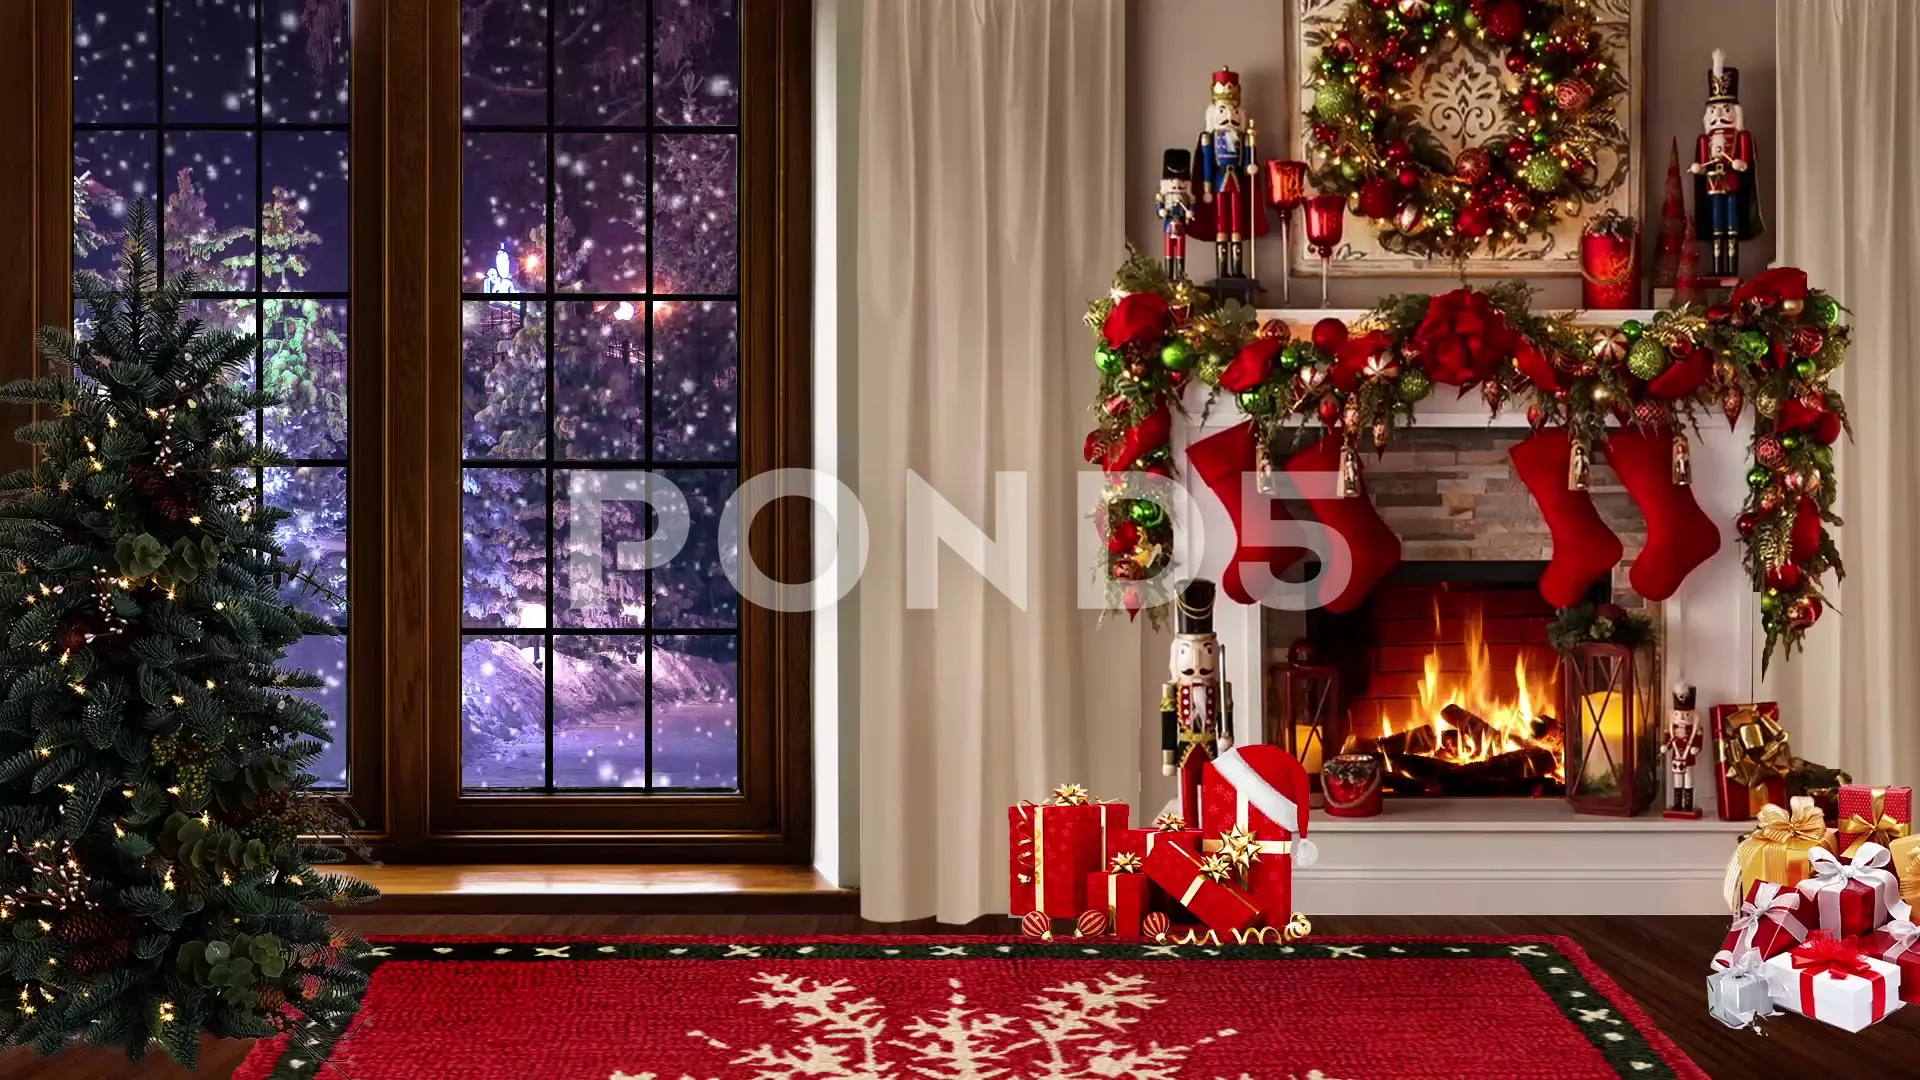 HD Christmas TV Virtual Studio Green Scr... | Stock Video | Pond5